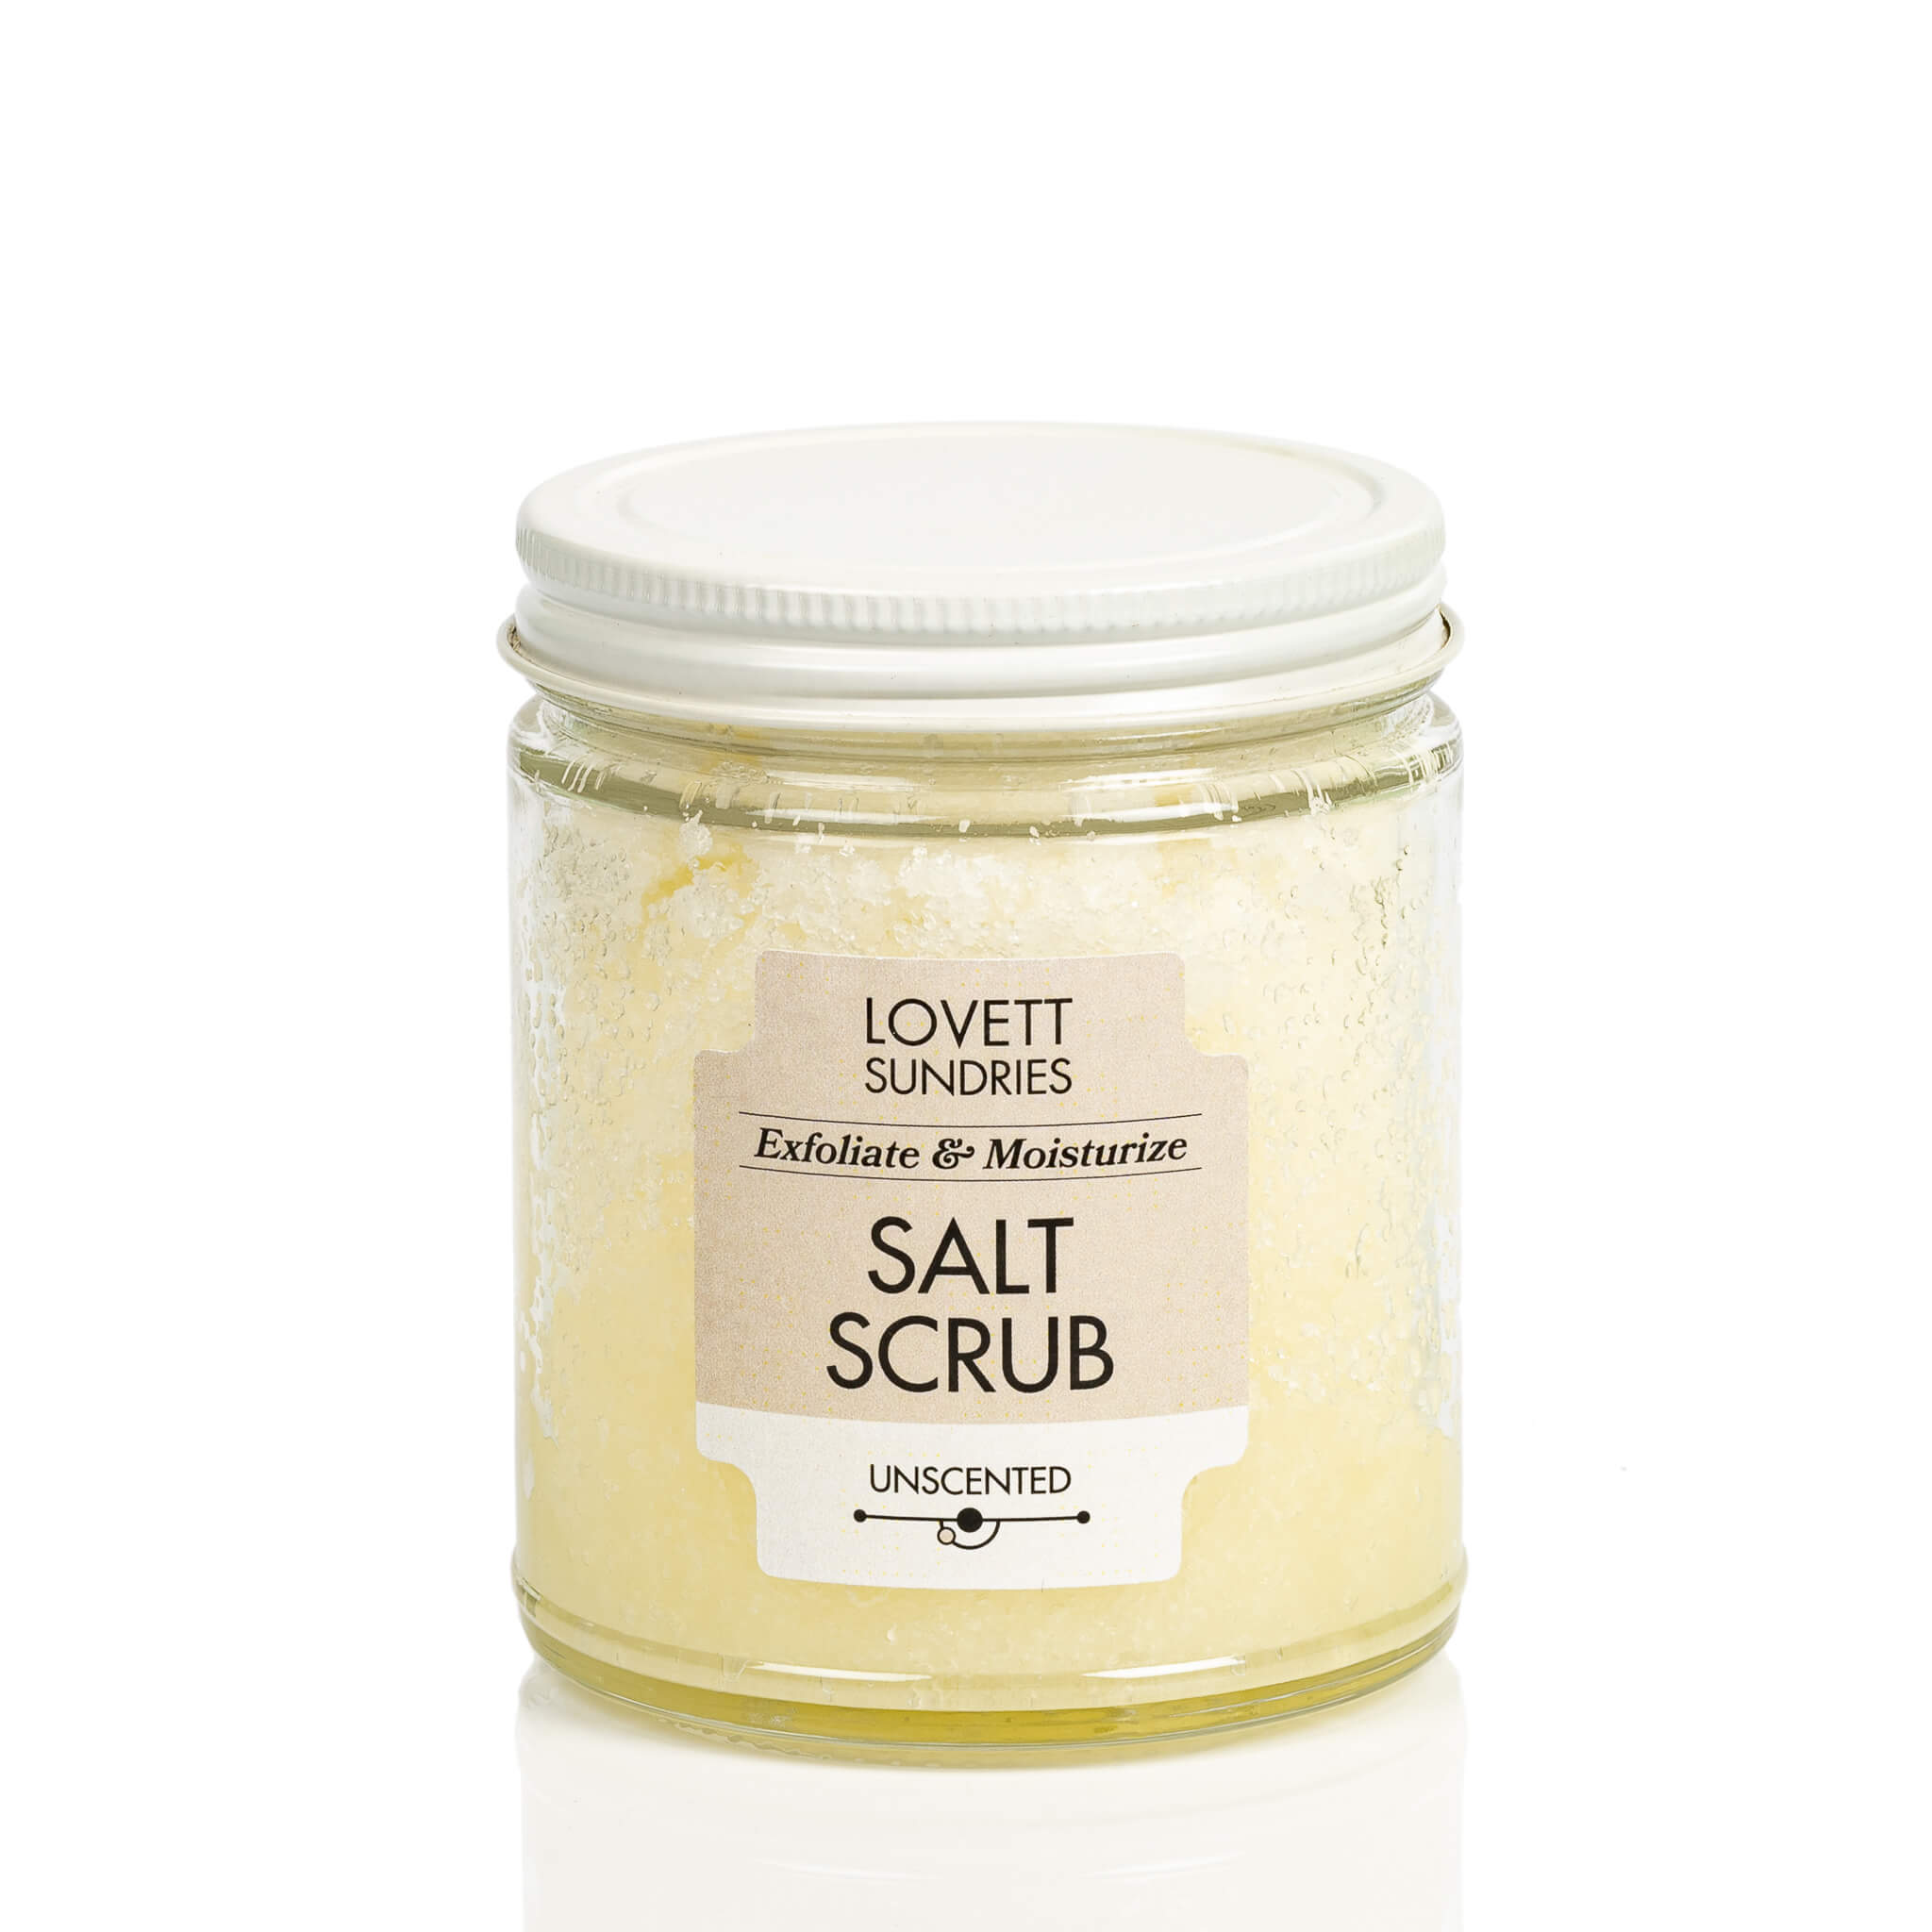 Exfoliating and moisturizing unscented all natural salt scrub. 